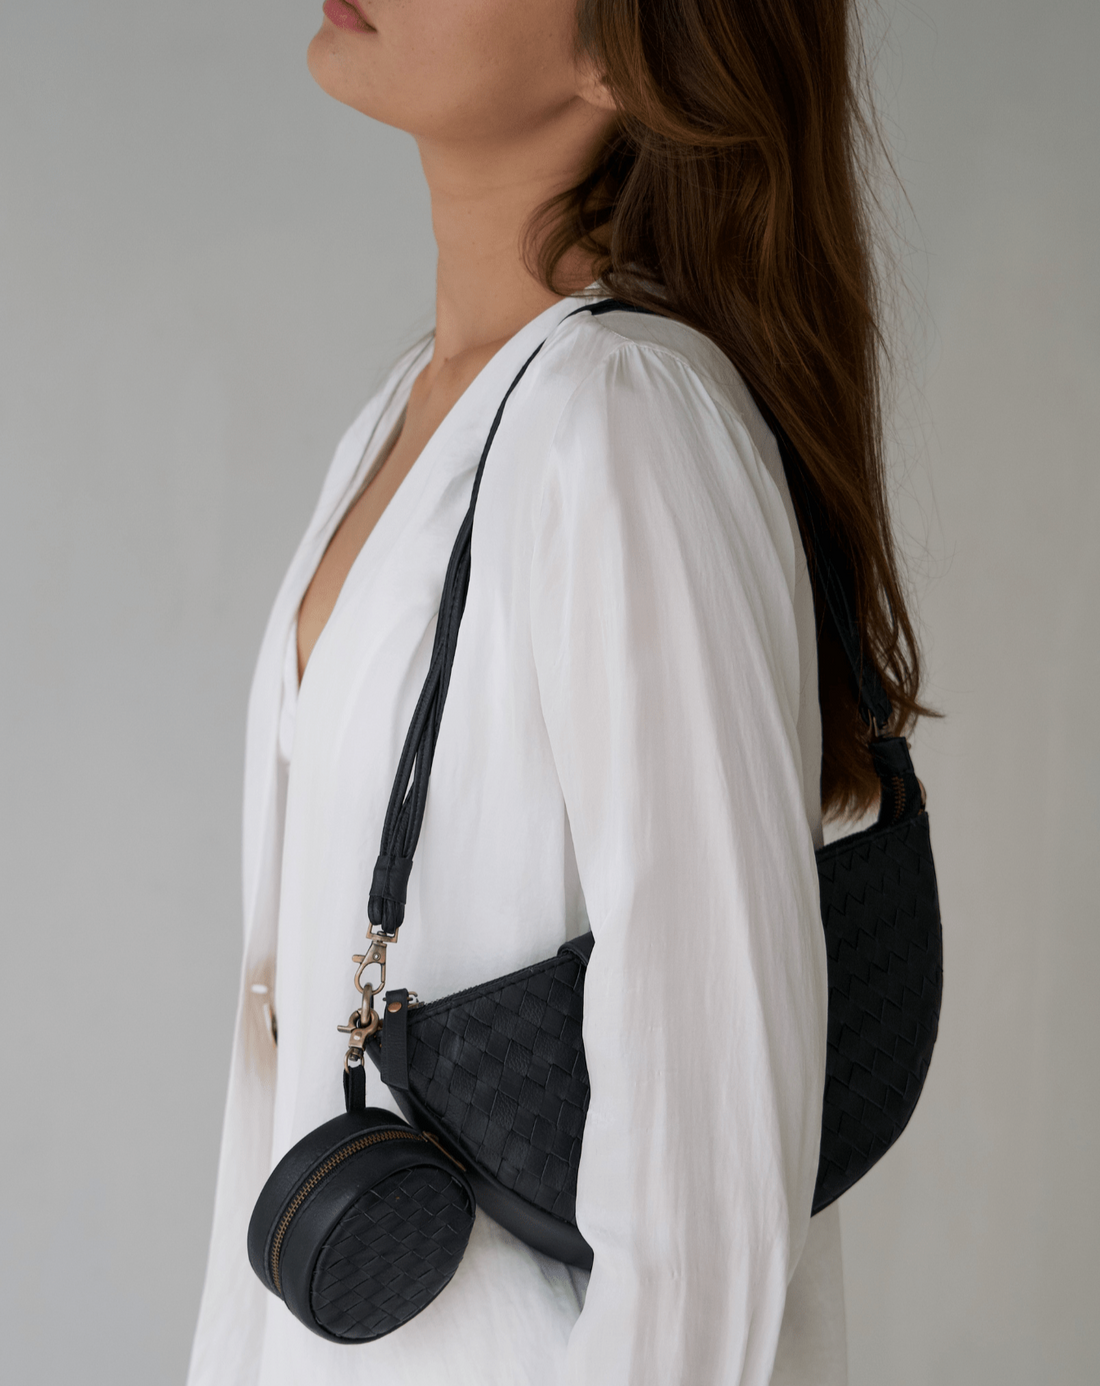 MANDRN | The Woven Naomi Bag- Black Leather Purse